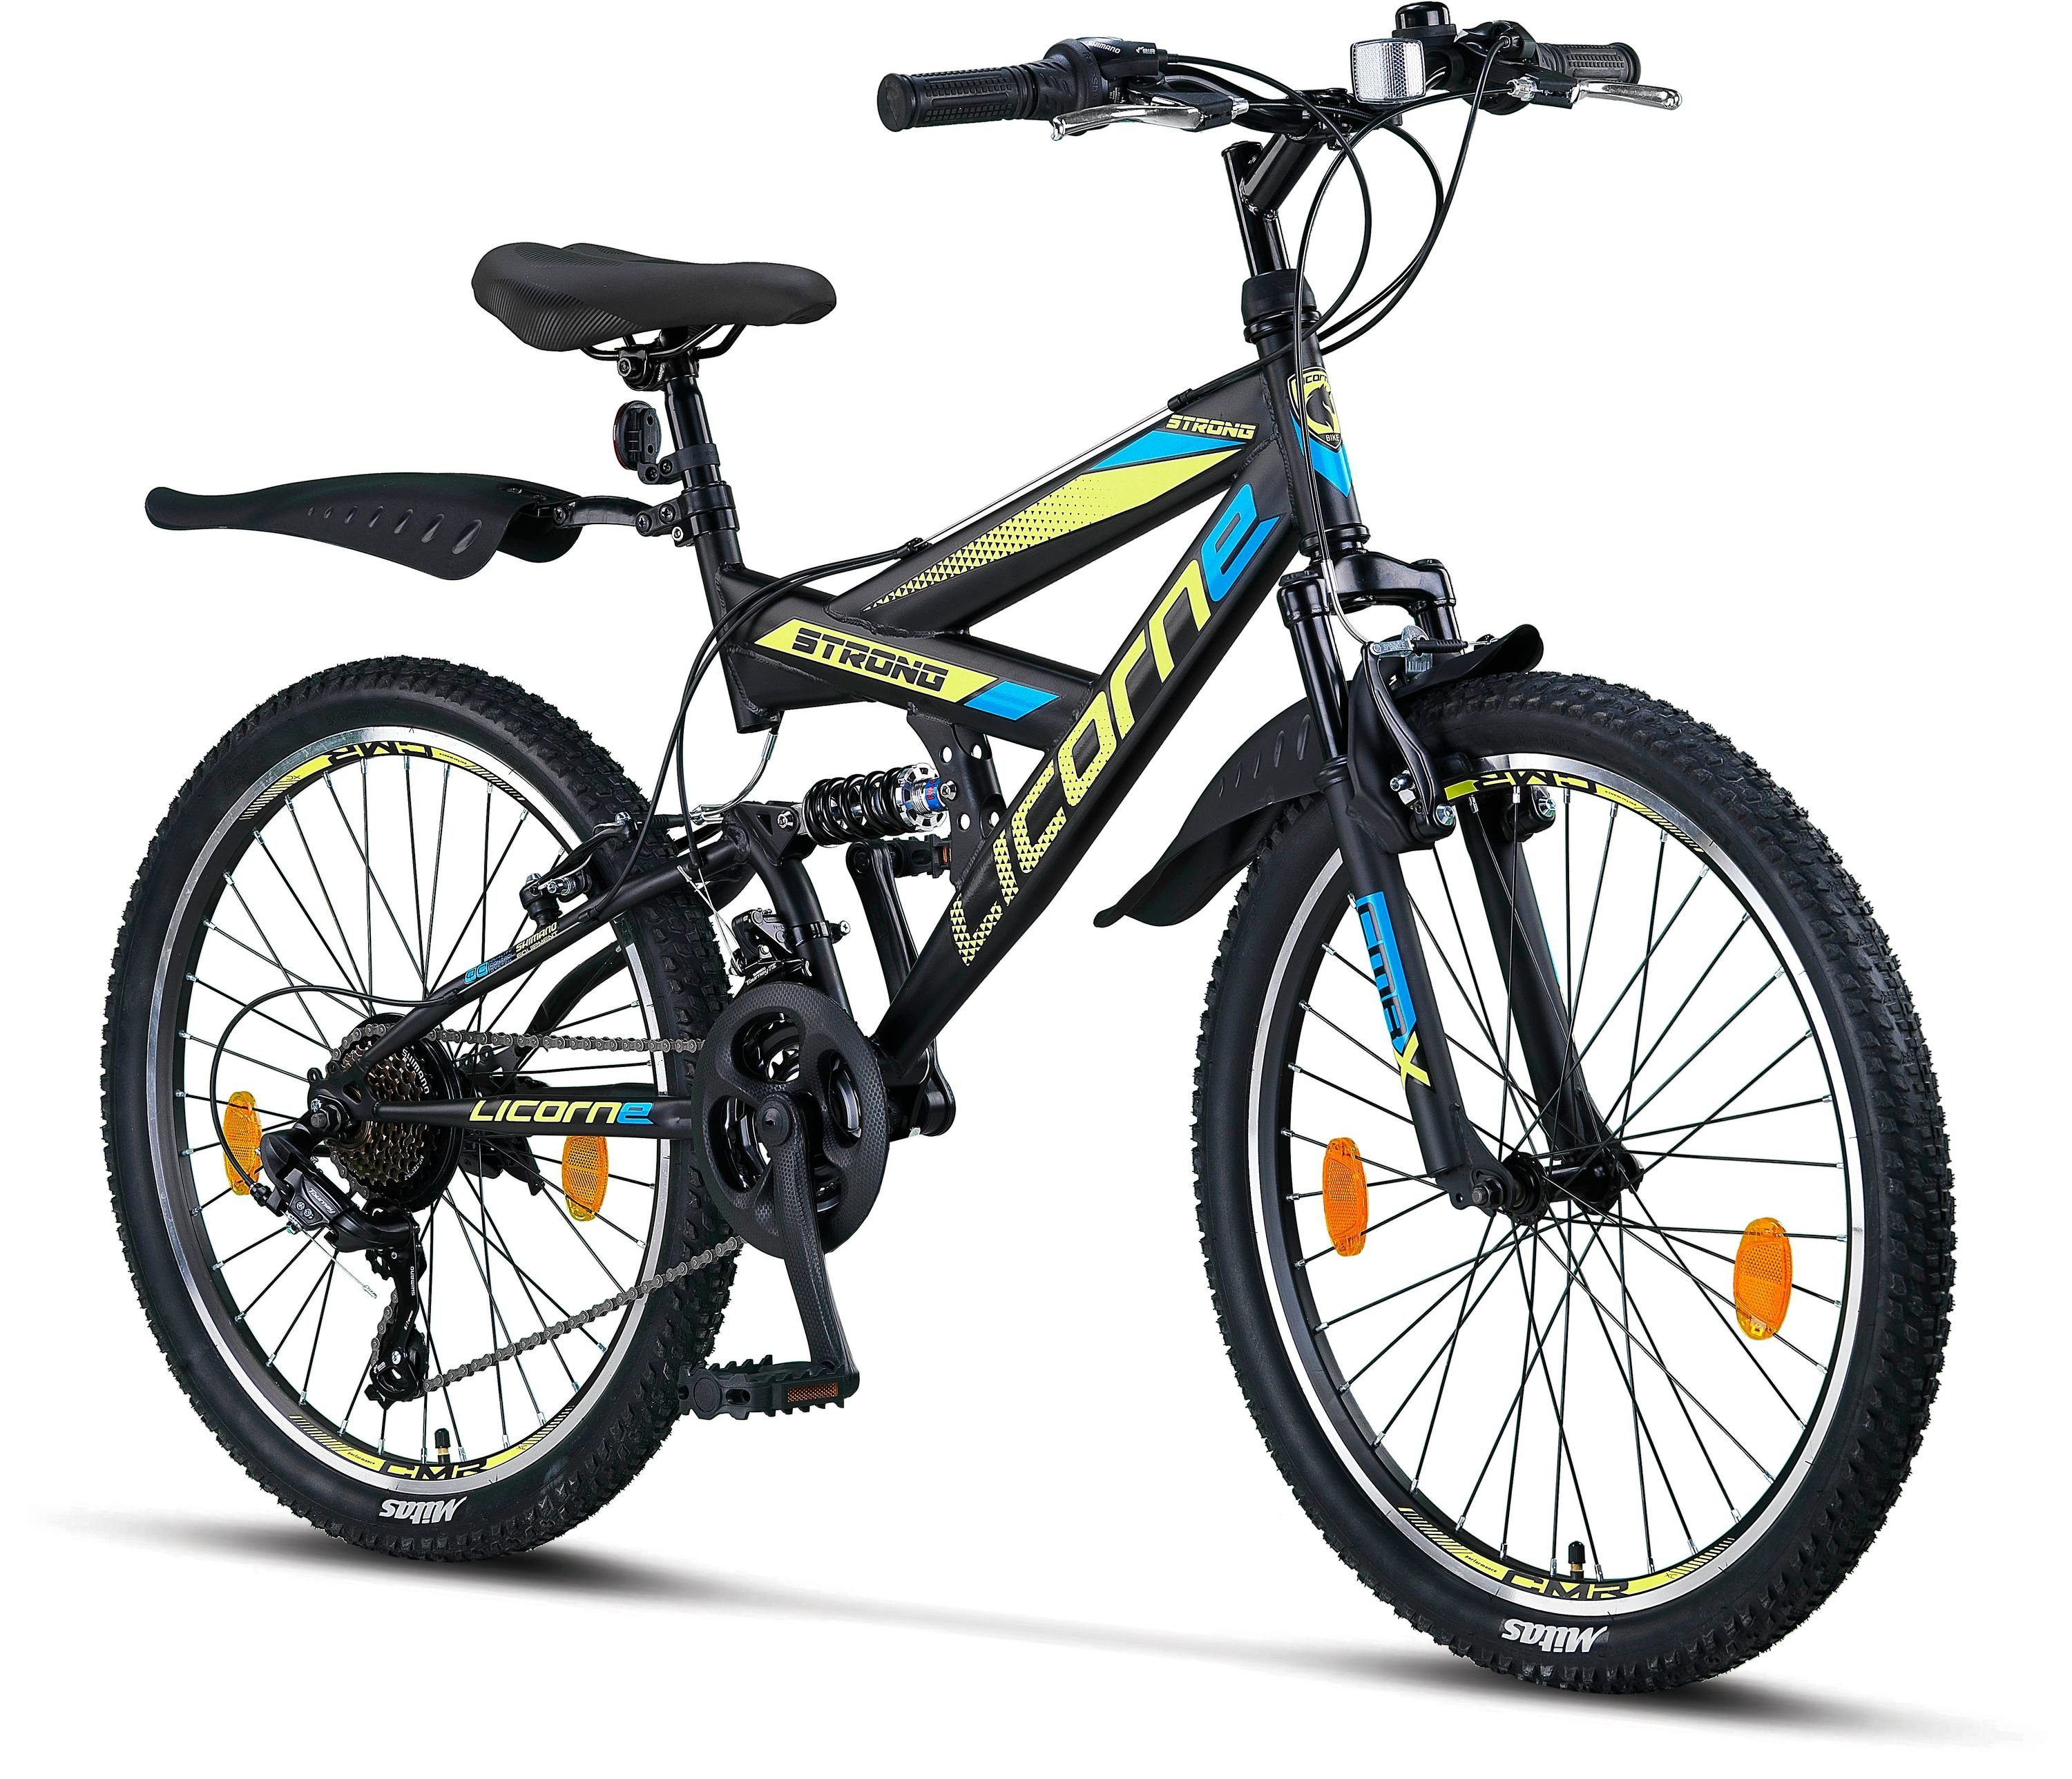 26 Gang Mountainbike Mountainbike V Bike Premium in Strong und Schwarz/Blau/Lime Zoll, Licorne 21 24 Licorne Bike